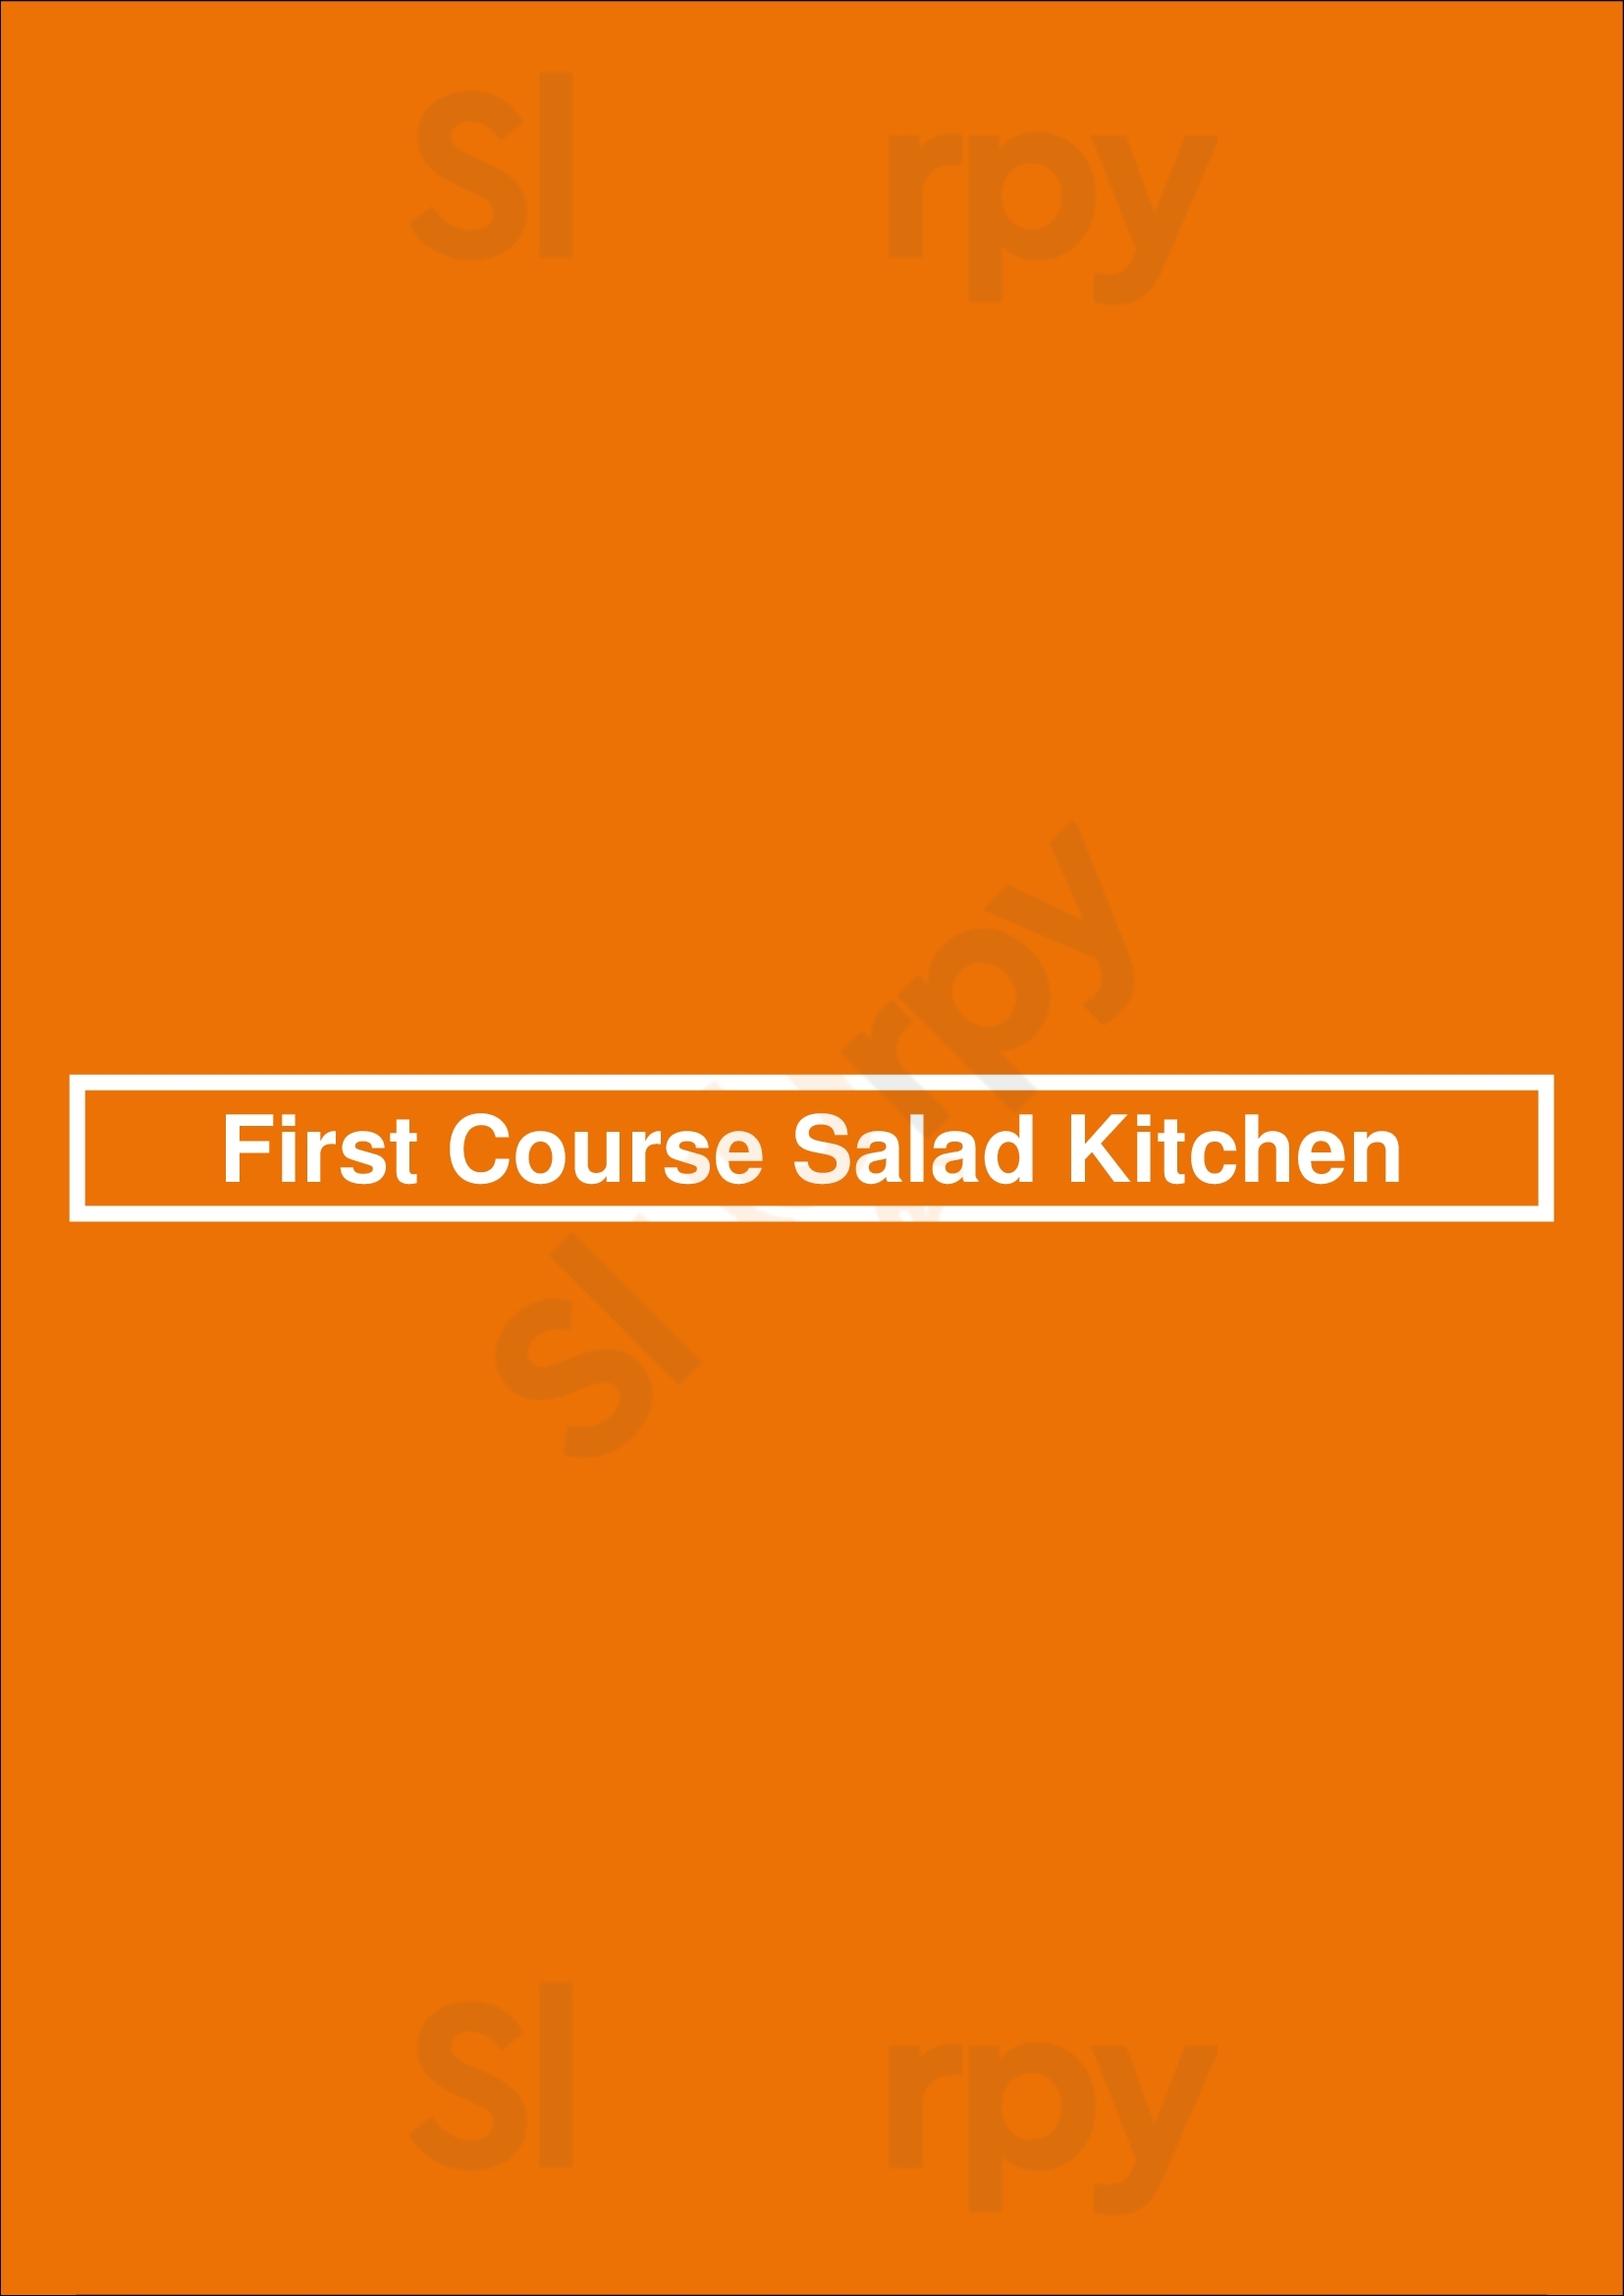 First Course Salad Kitchen San Antonio Menu - 1